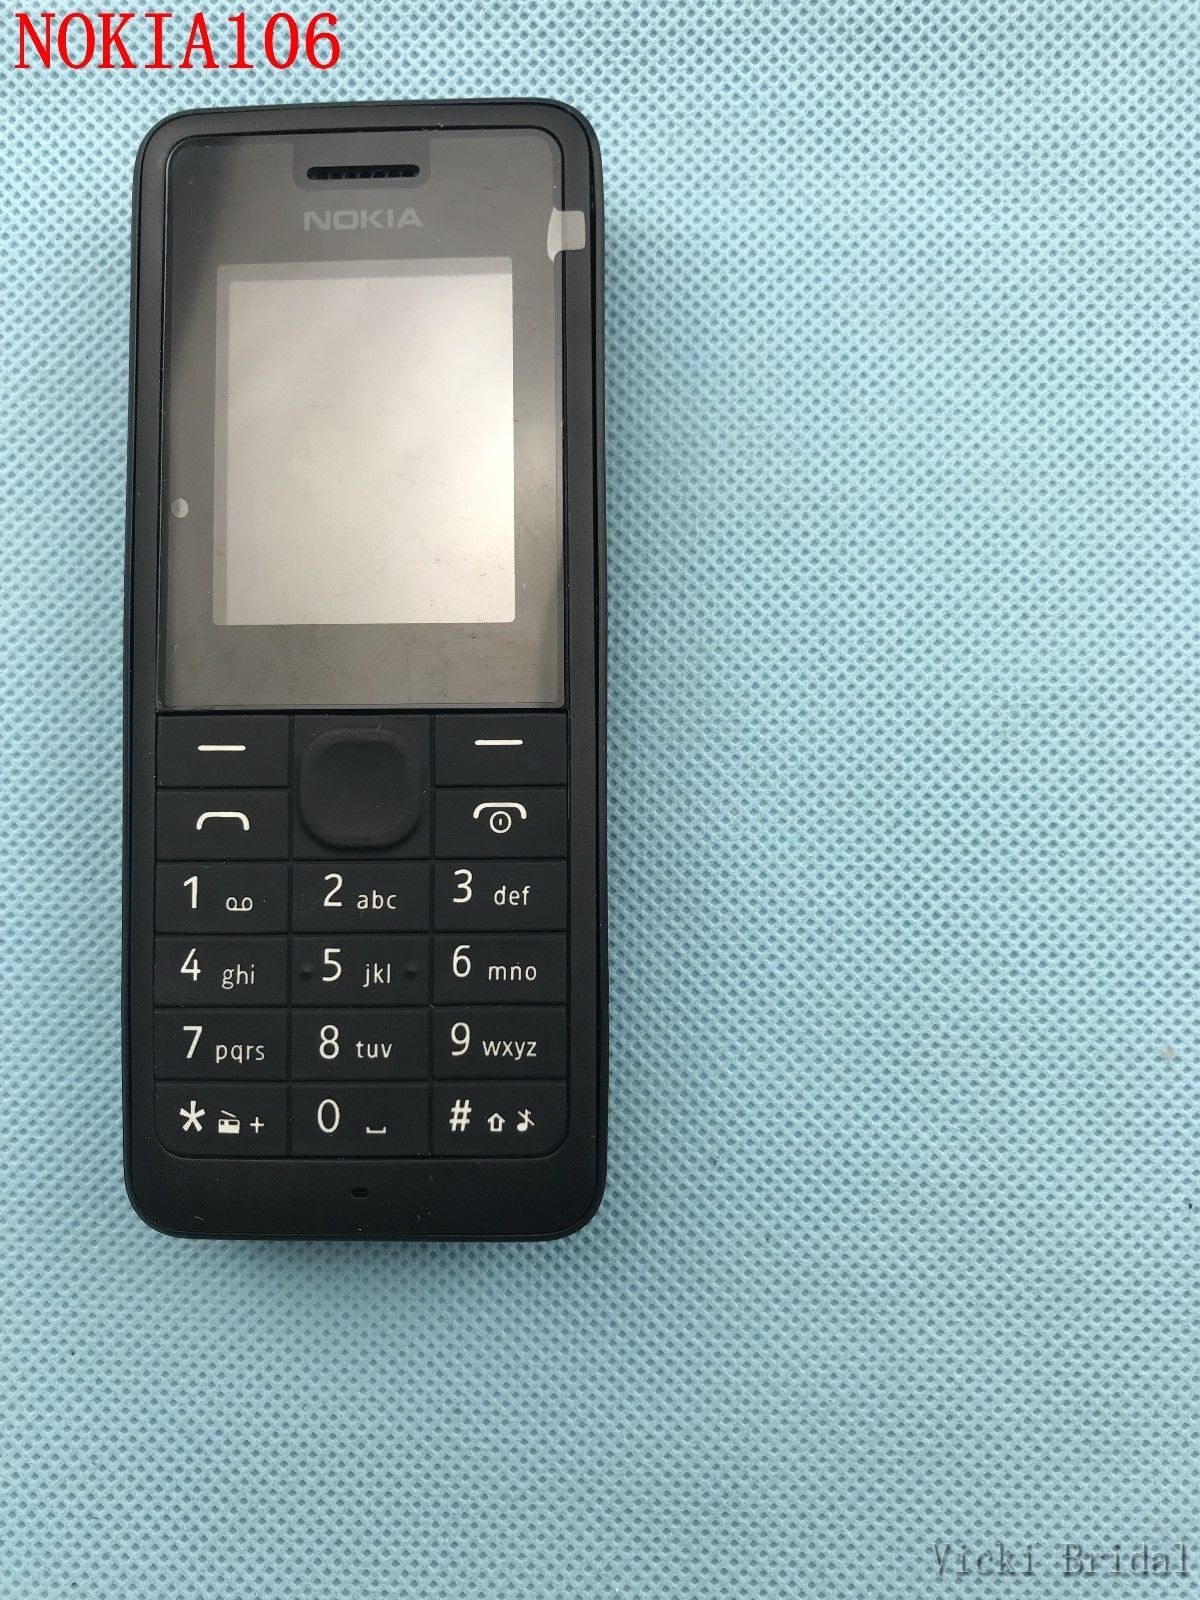 new Nokia 106 Unlocked Simple Mobile Phone Multiple keyboards languages white 16